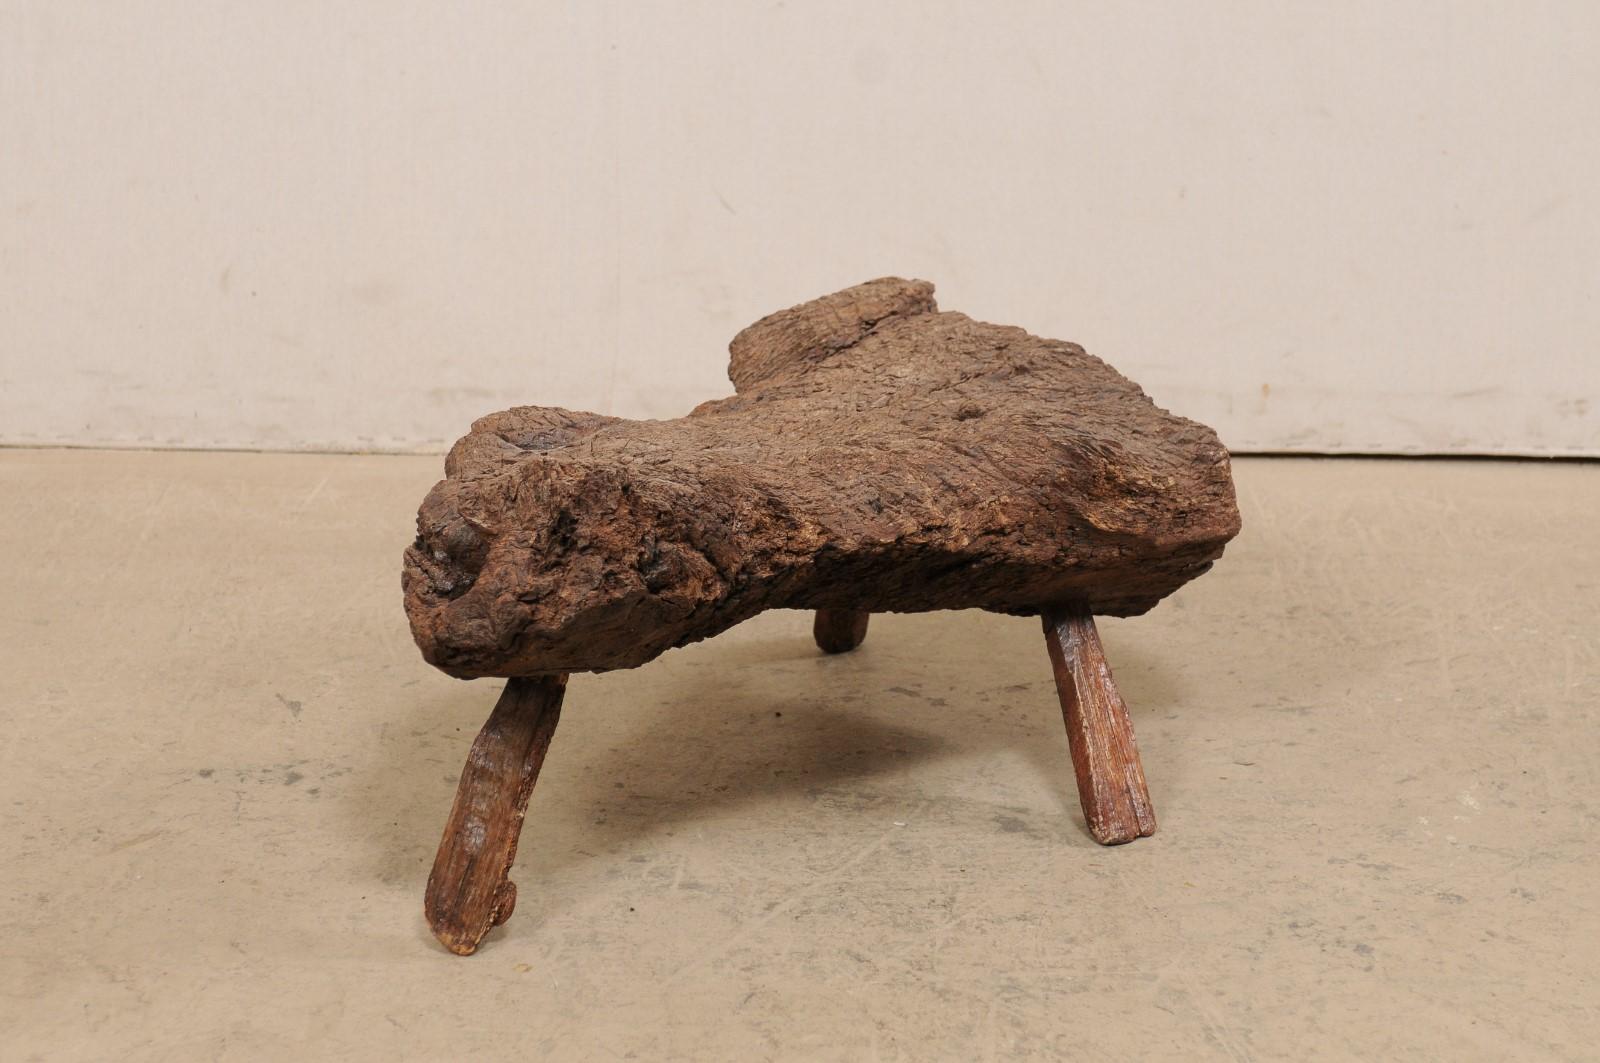 Spanish Petite-Sized Knobby Live-Edge Burl Wood Table or Stool on Limb Legs 6